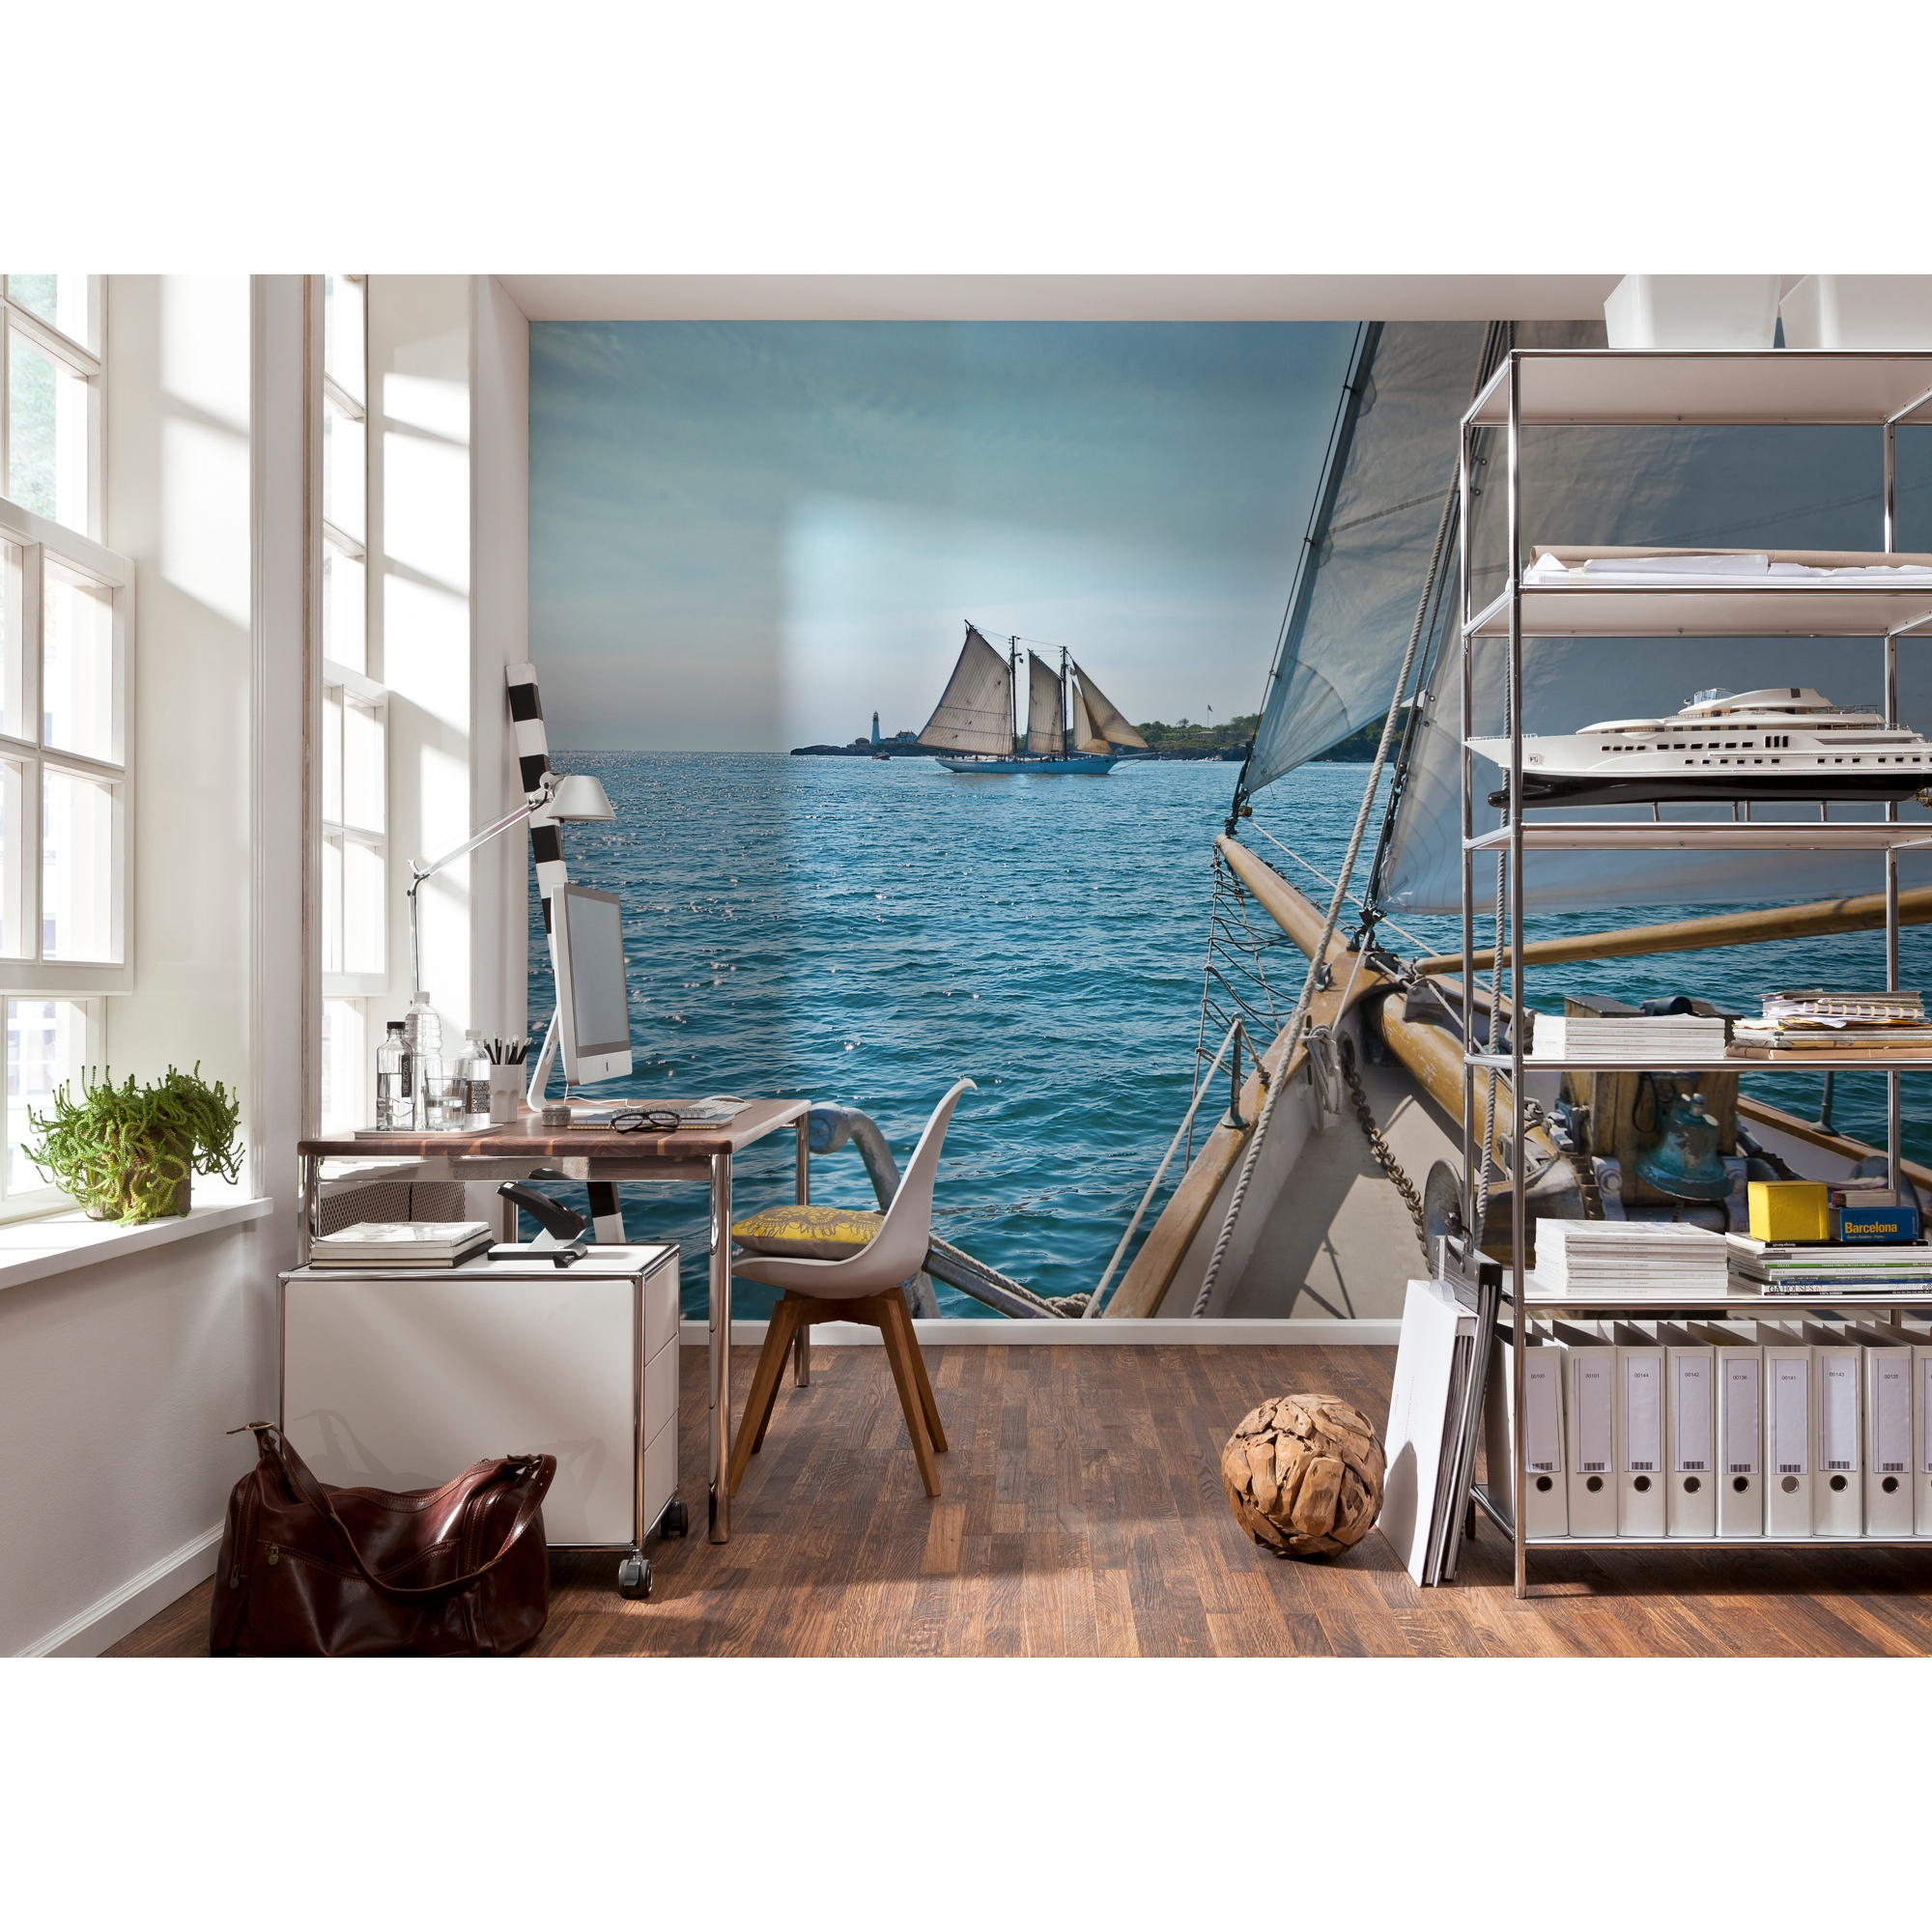 Fototapete 'Sailing' 368 x 254 cm + product picture